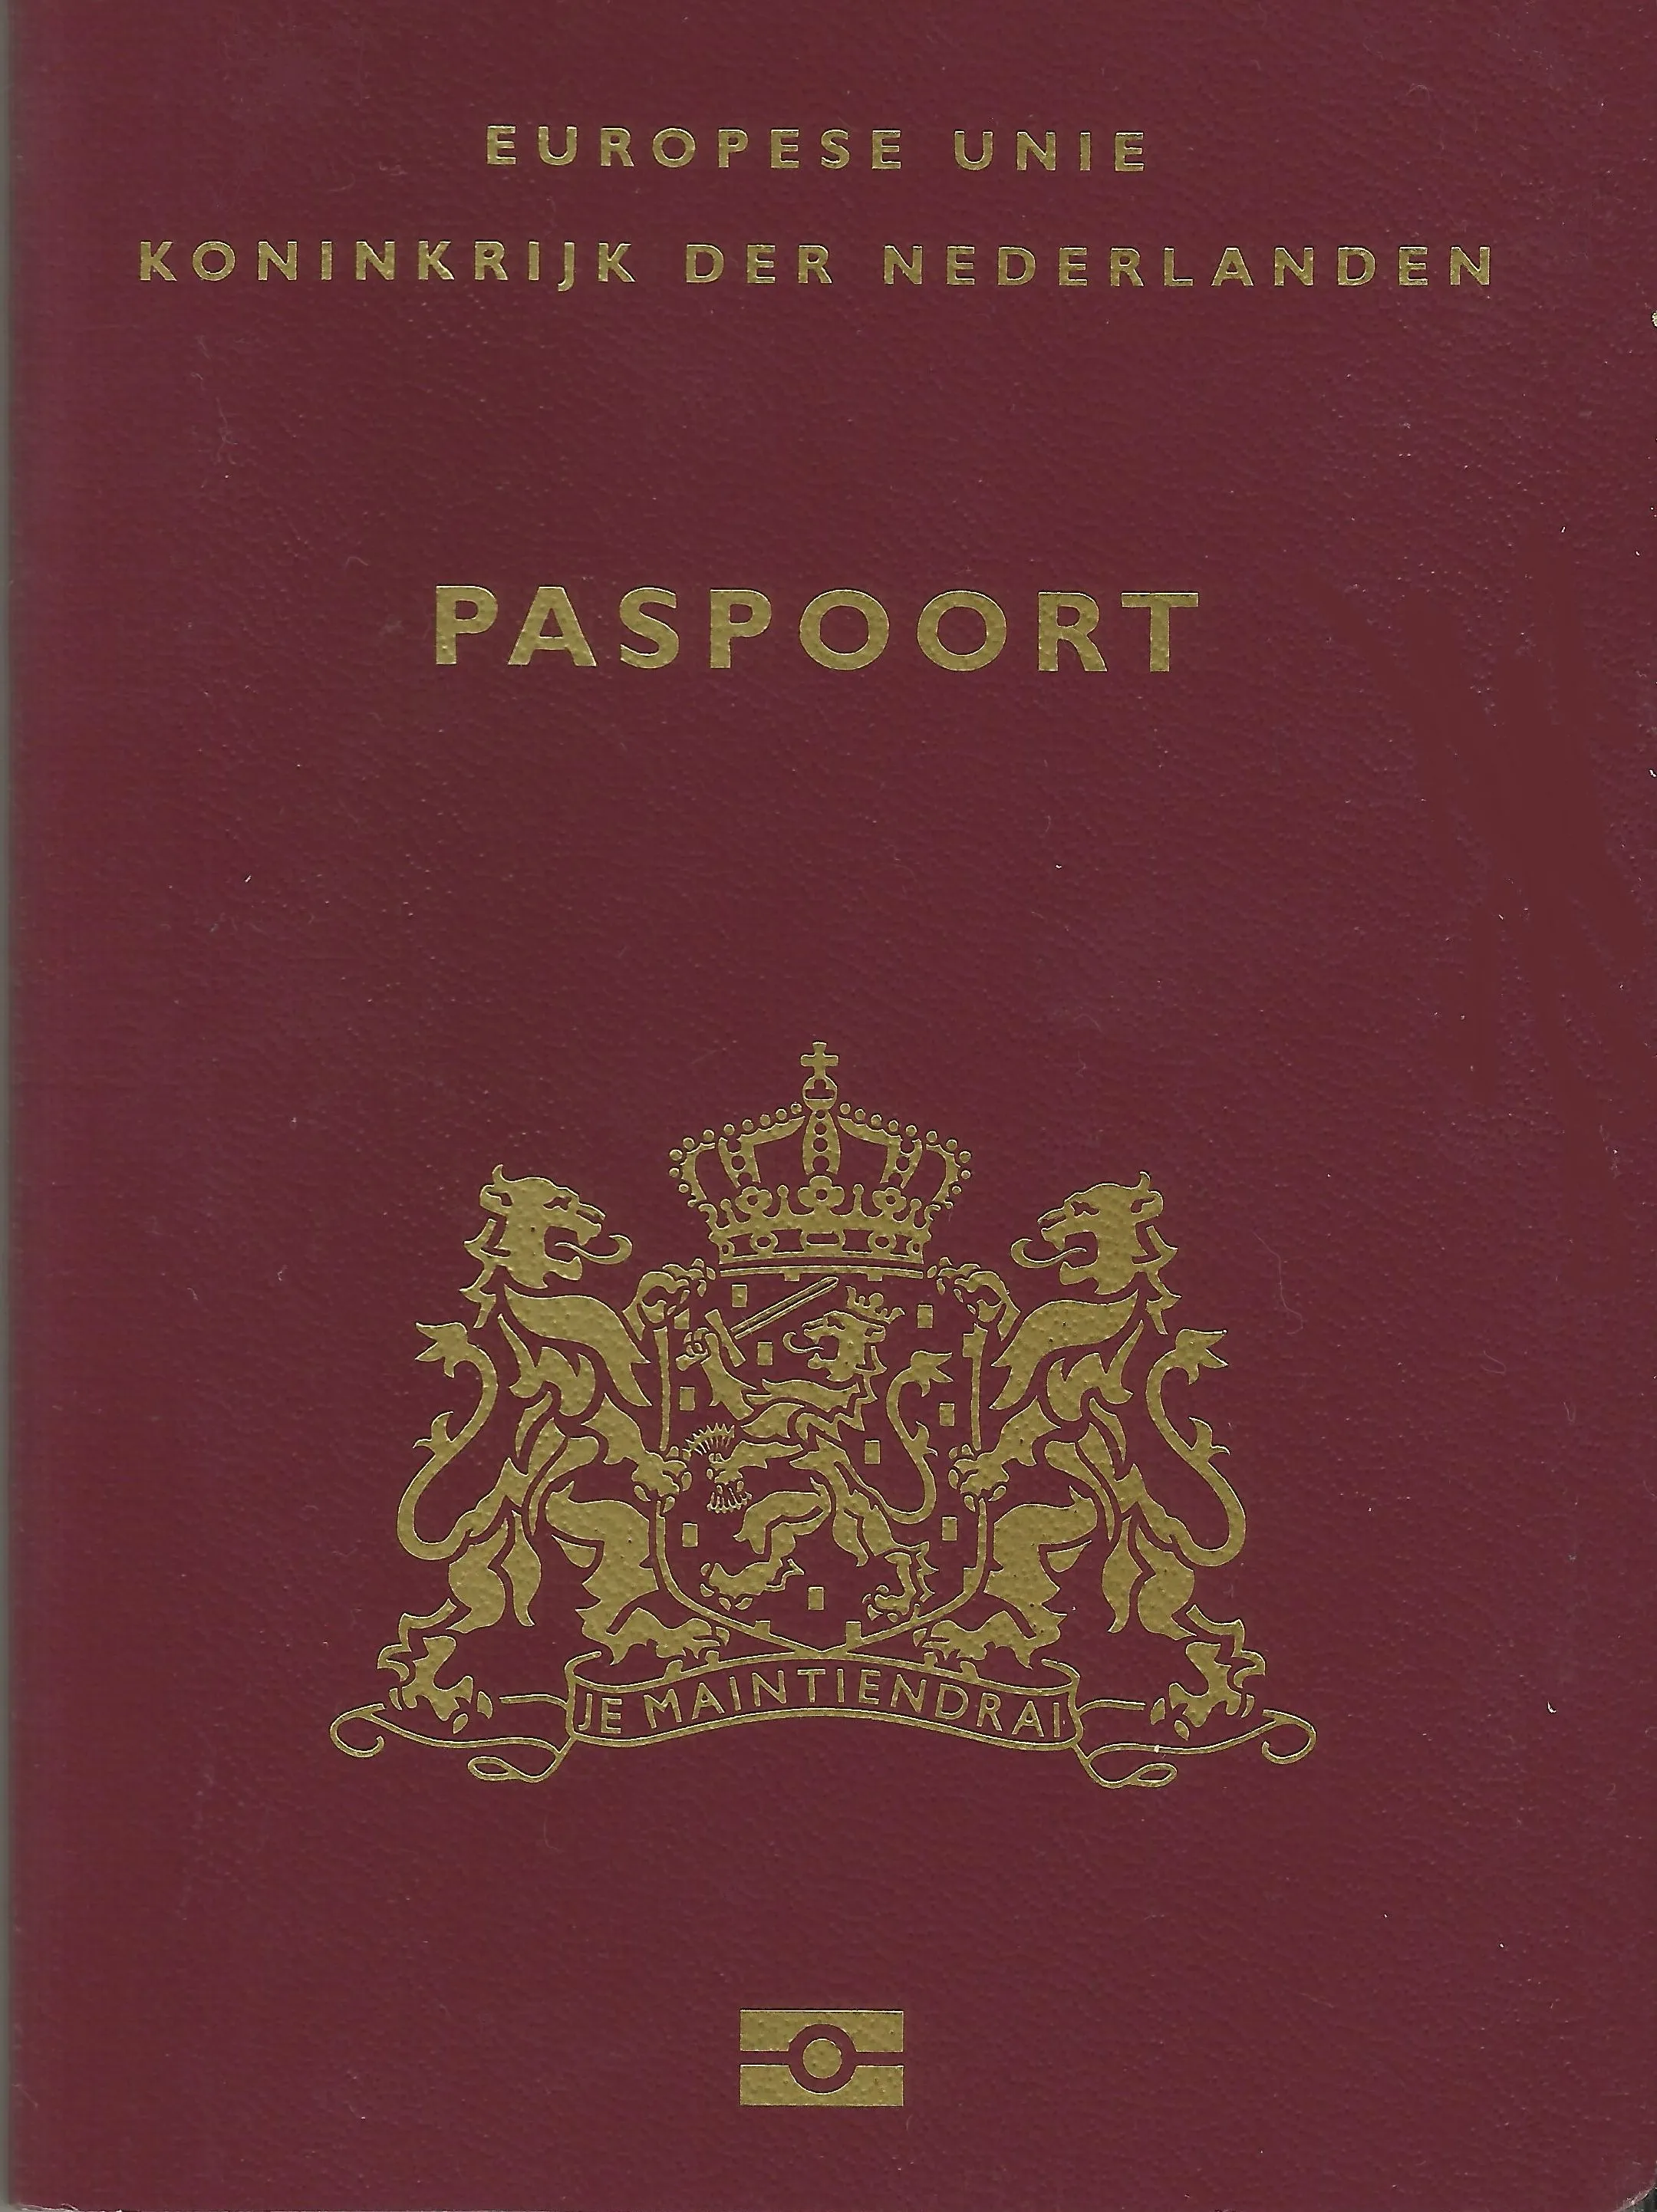 nederland paspoort cover 2011